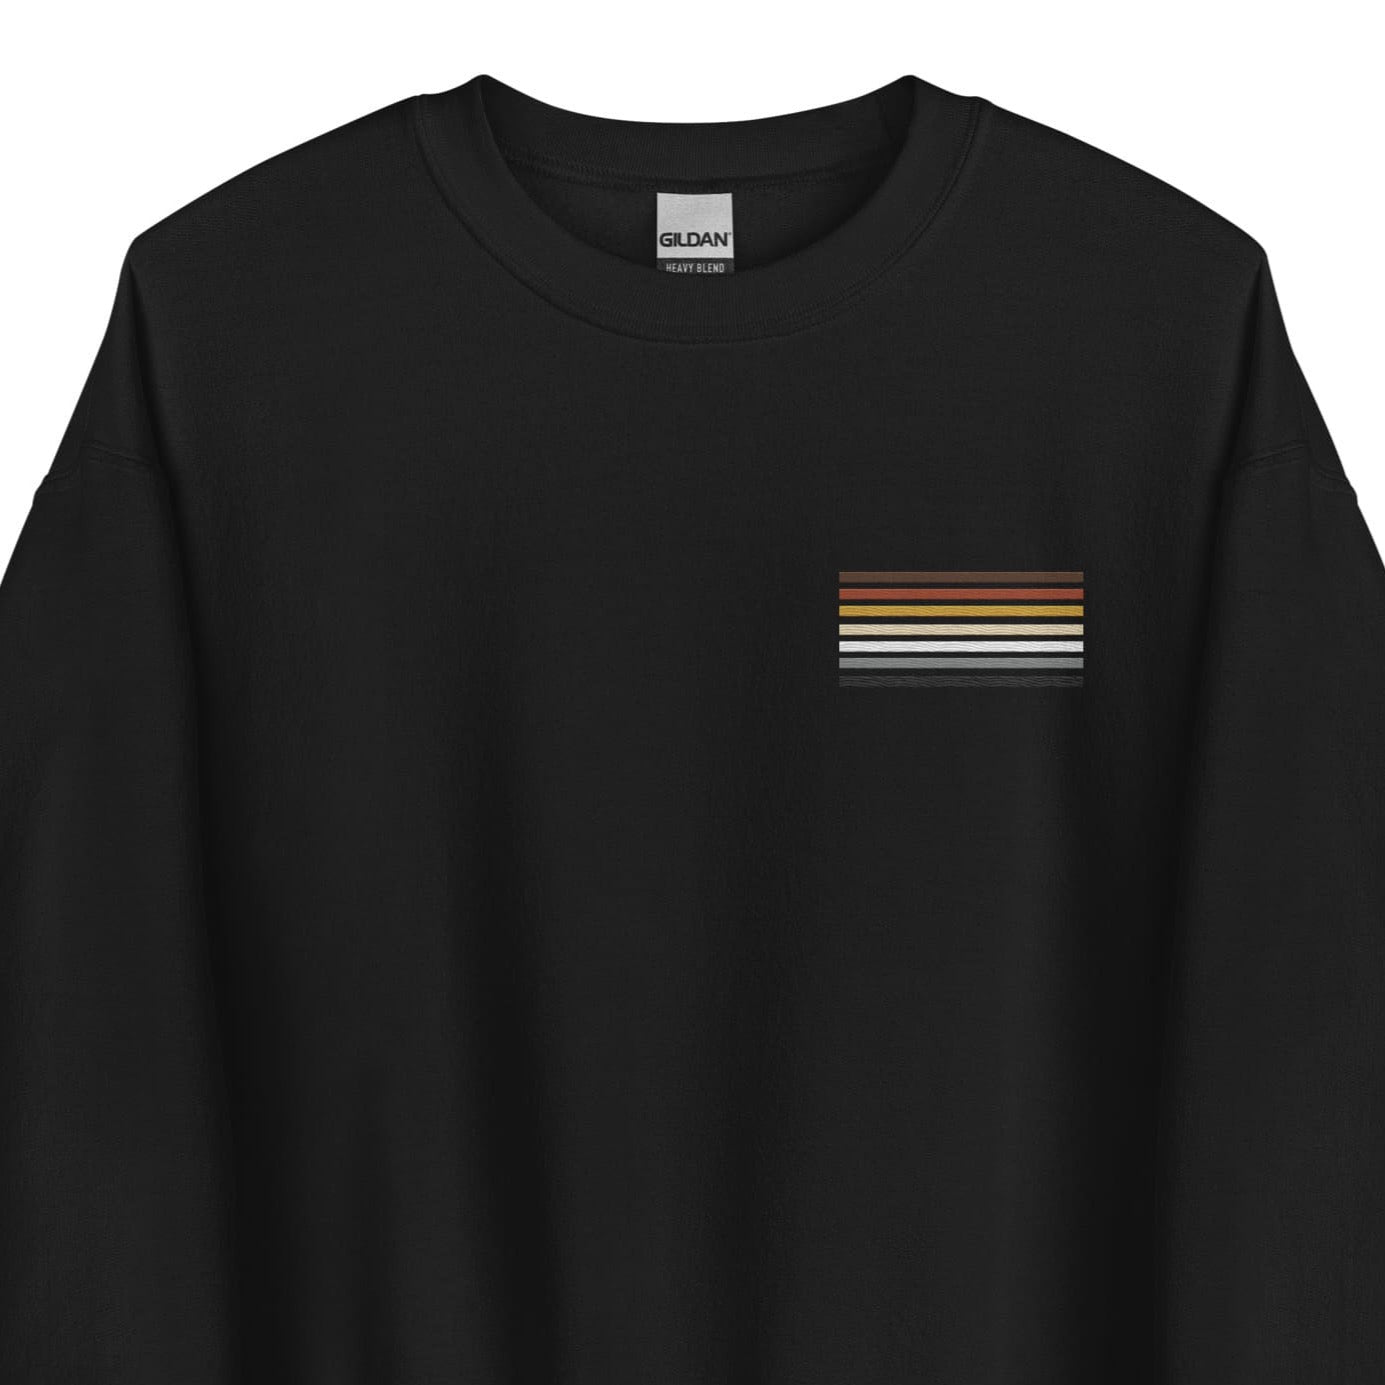 bear pride sweatshirt, subtle gay bear flag embroidered pocket design sweater, main